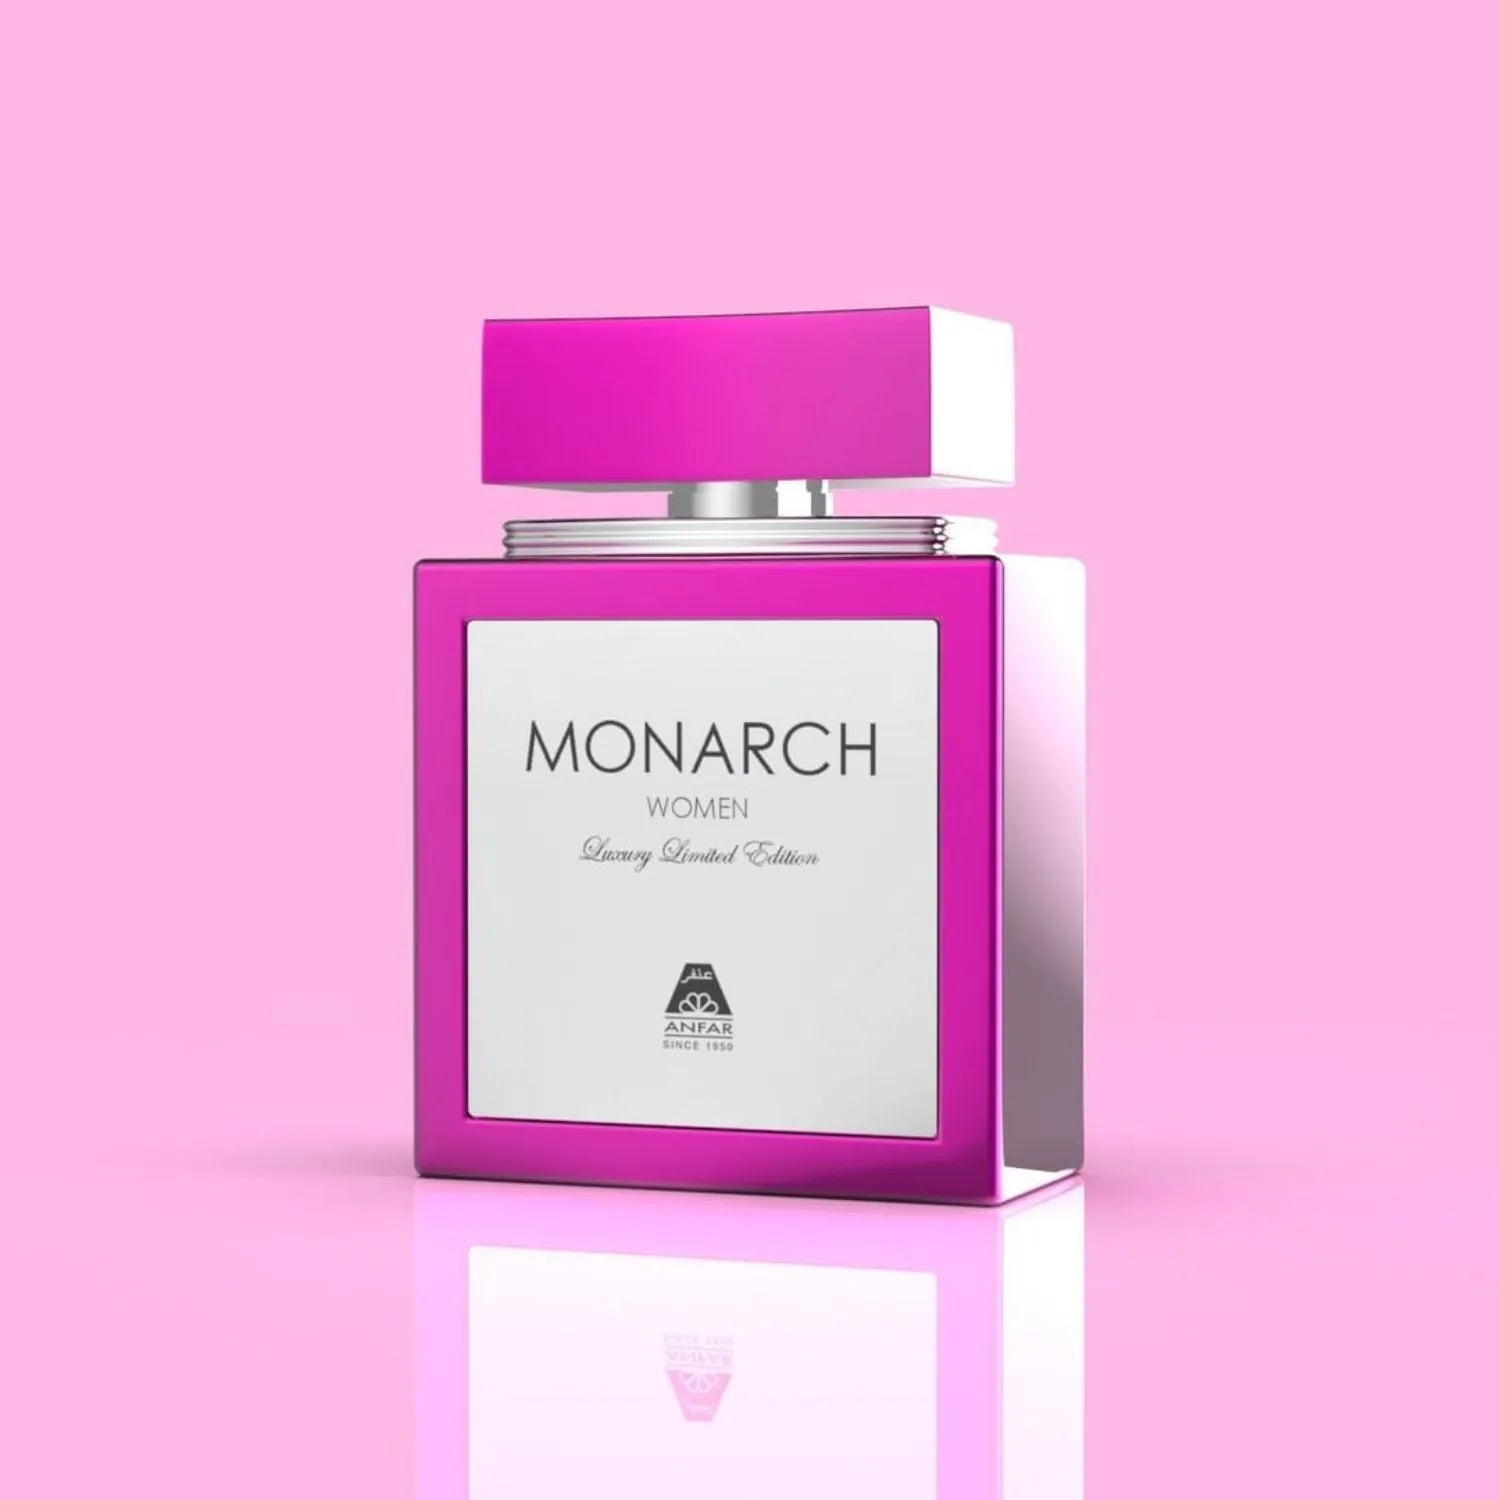 Monarch Women Perfume Image